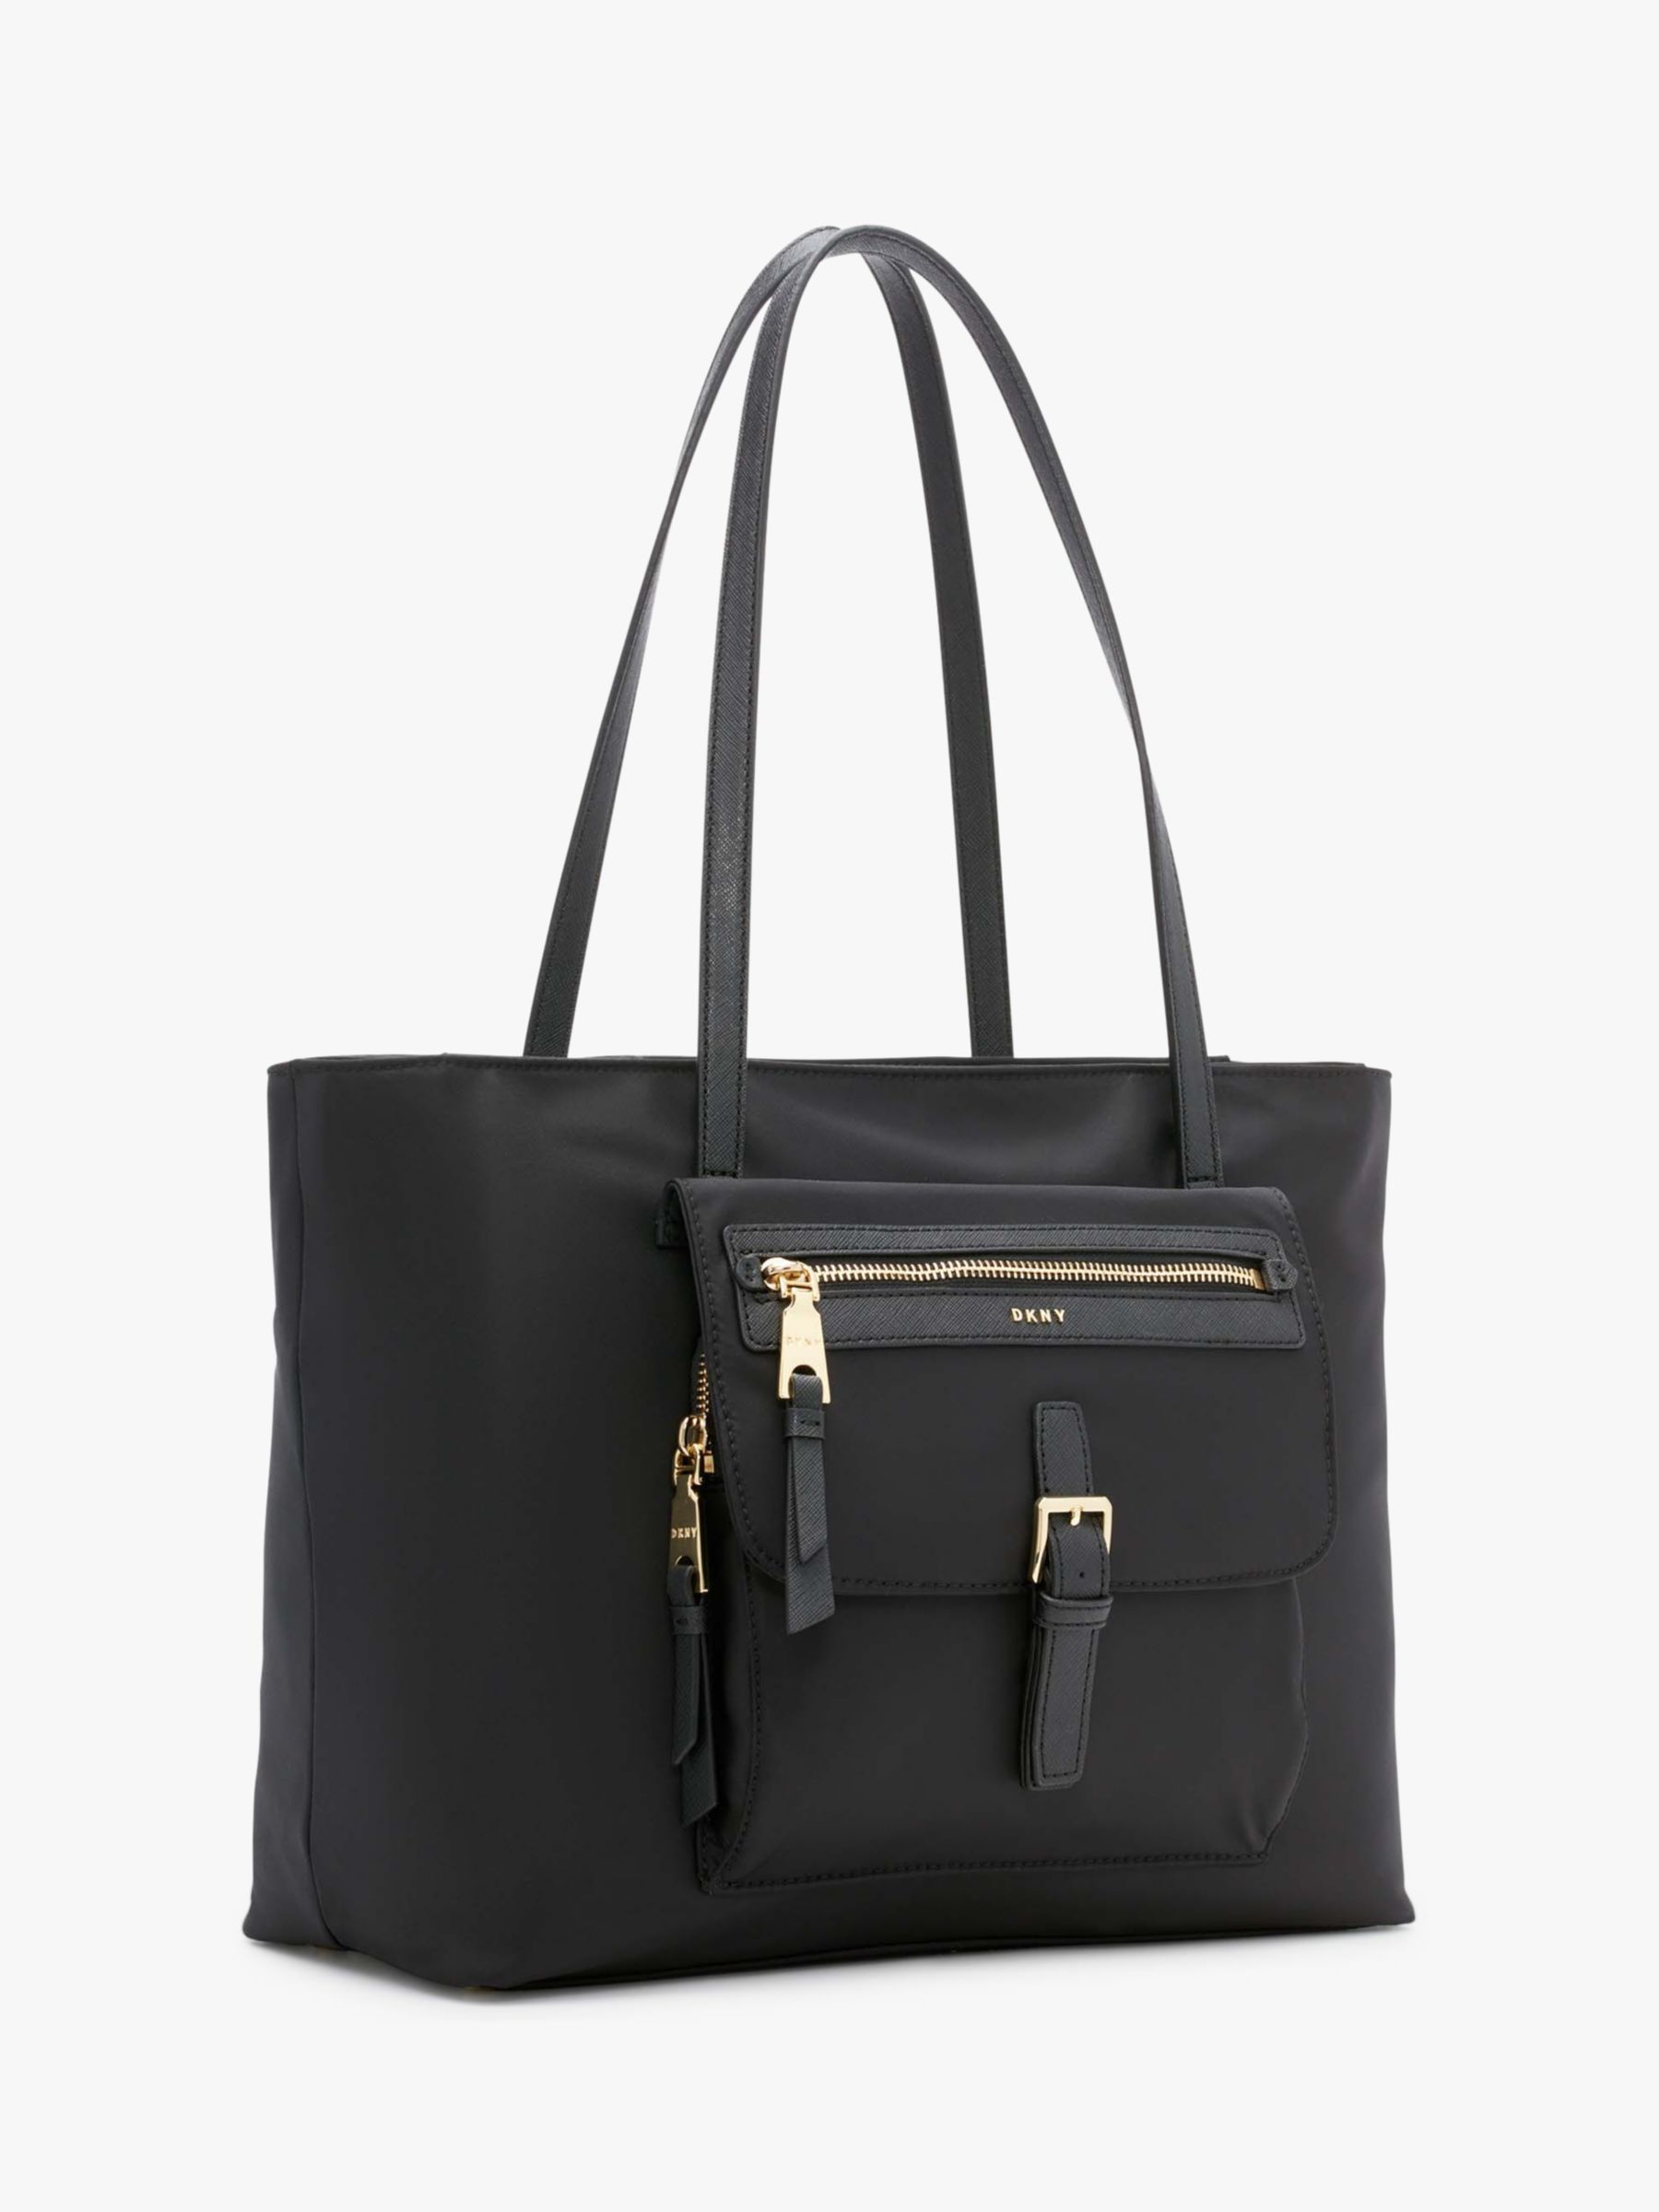 DKNY Cora Nylon Tote Bag, Black at John Lewis & Partners